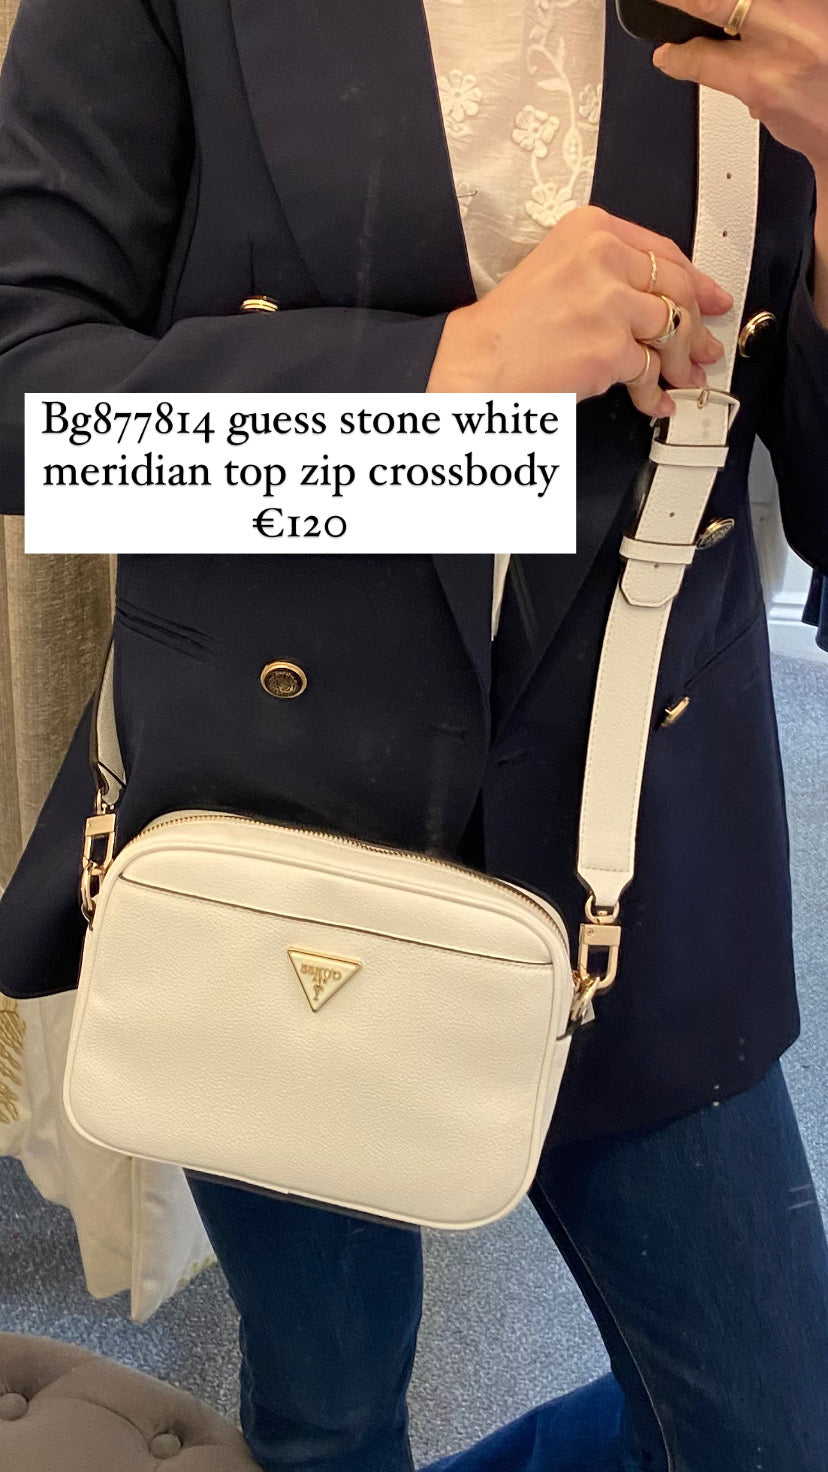 Bg877814 guess stone white meridian top zip crossbody